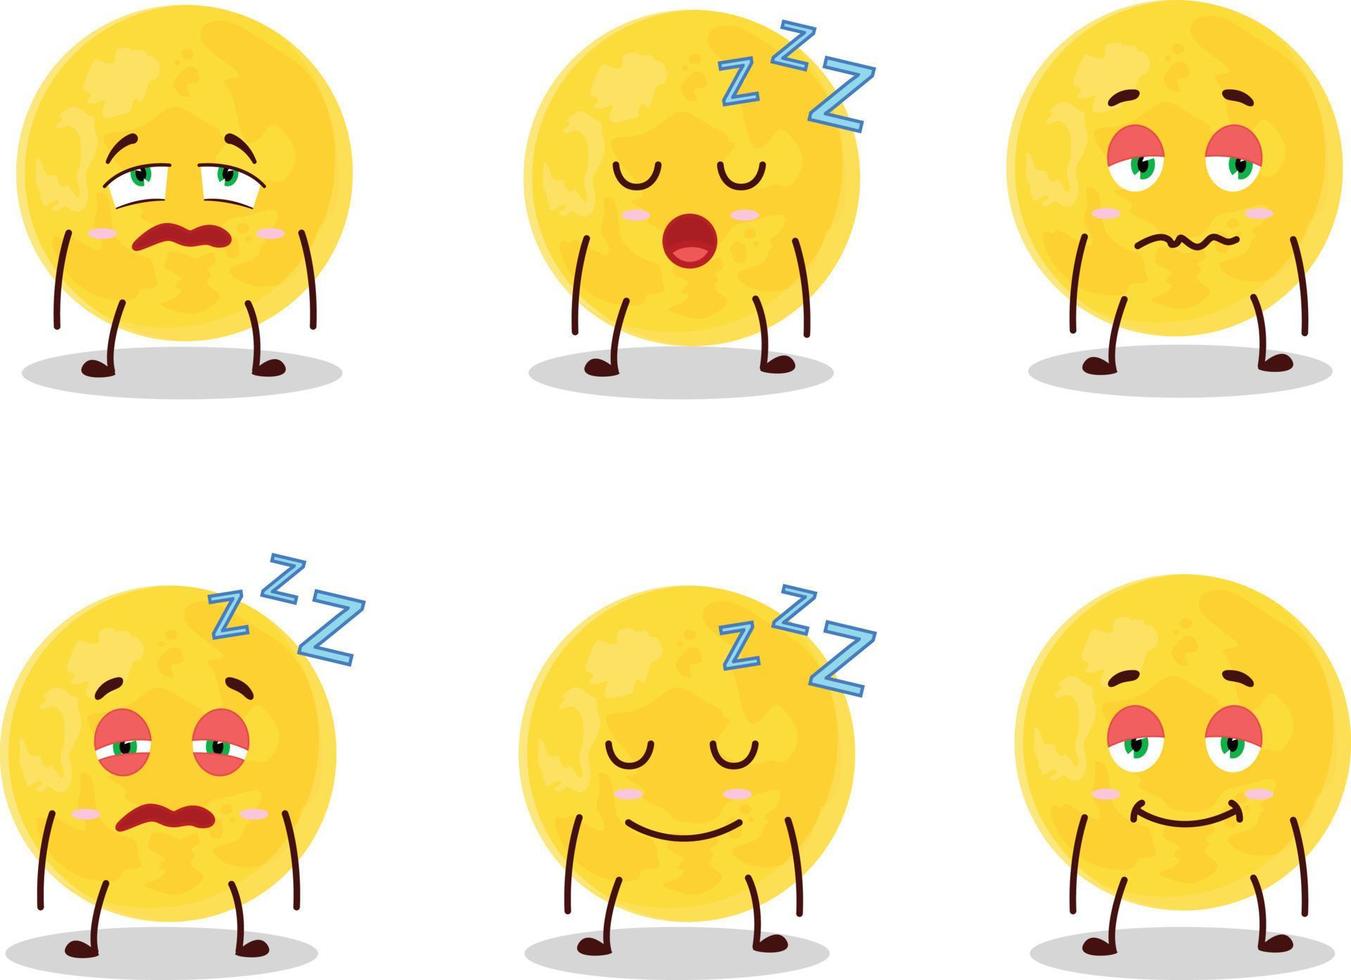 tekenfilm karakter van geel maan met slaperig uitdrukking vector